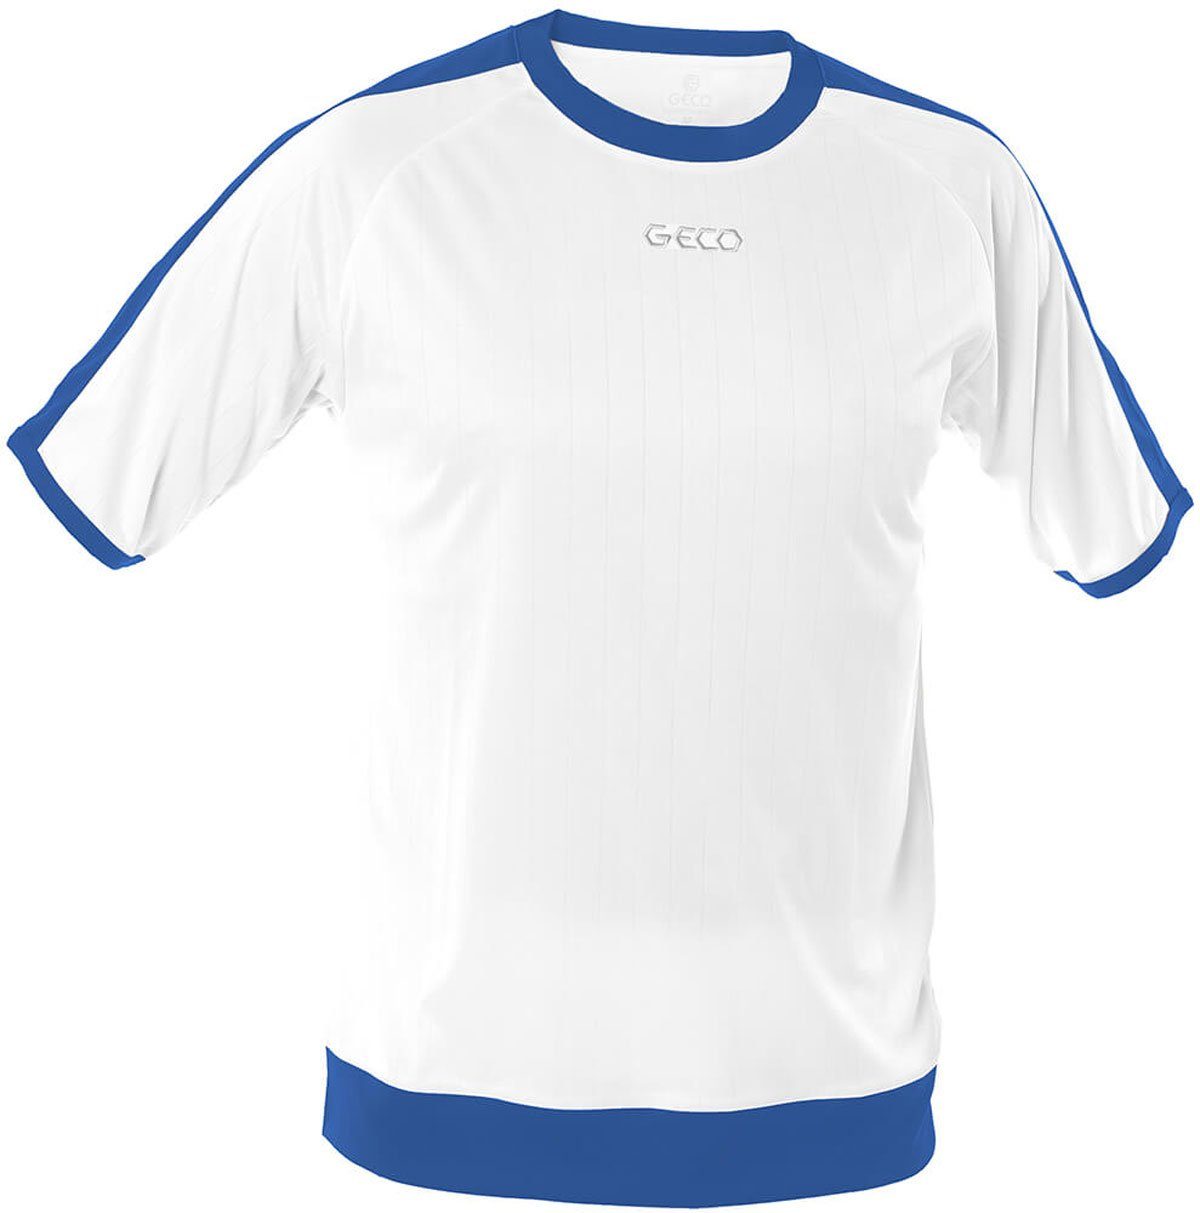 Trikot zweifarbig Geco weiß/royal Geco kurzarm Fußball Fußballtrikot NOTOS Sportswear